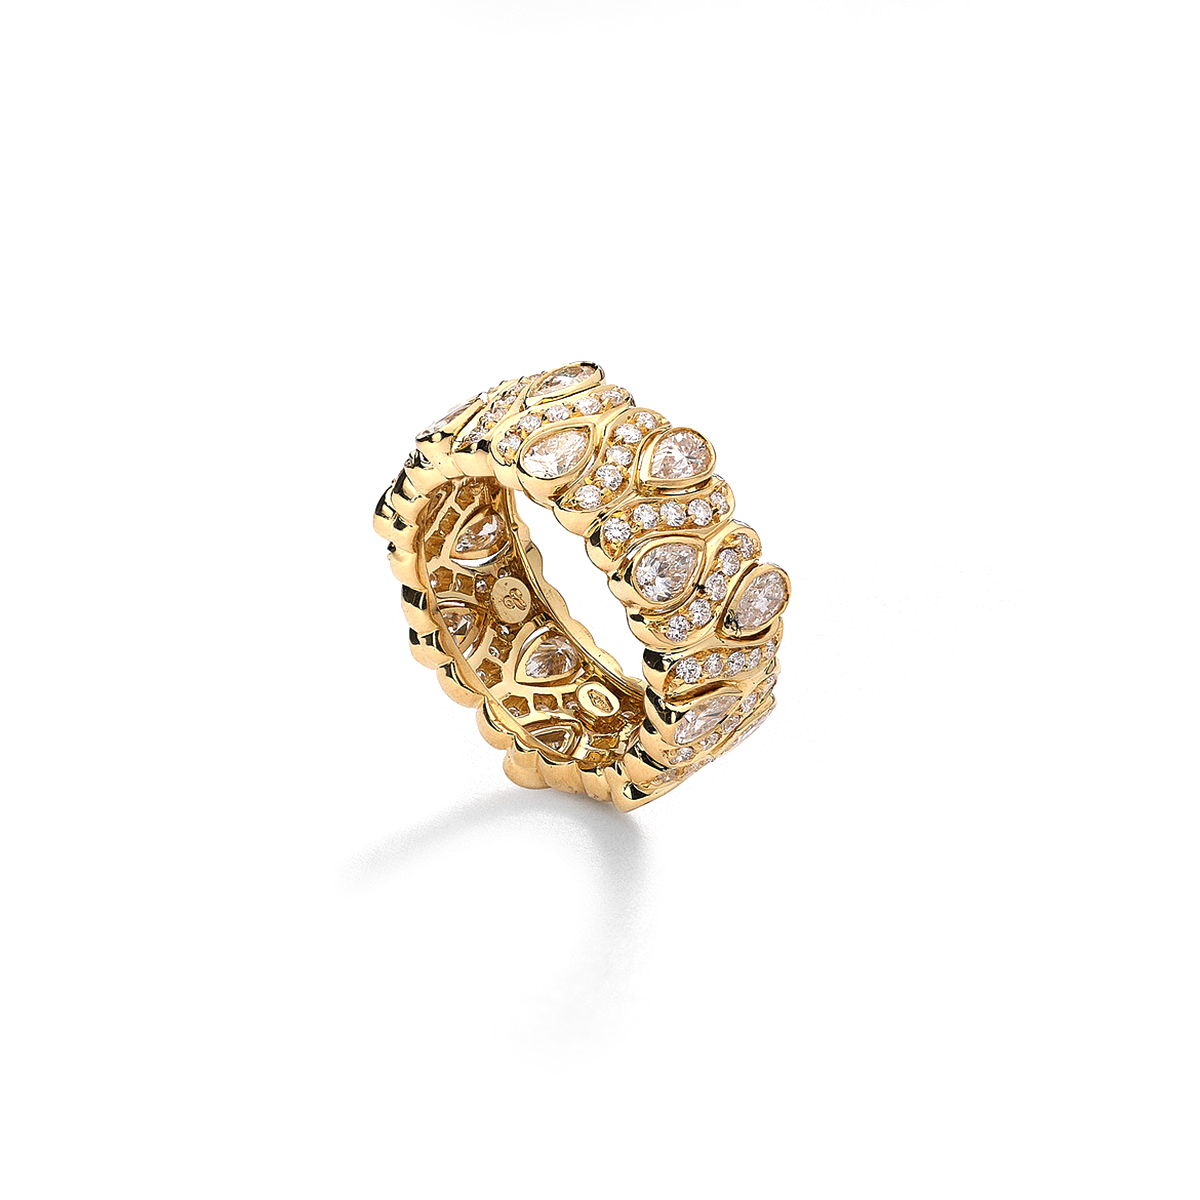 jewels-diamonds-pear-shaped-18kt-yellow-gold-ring